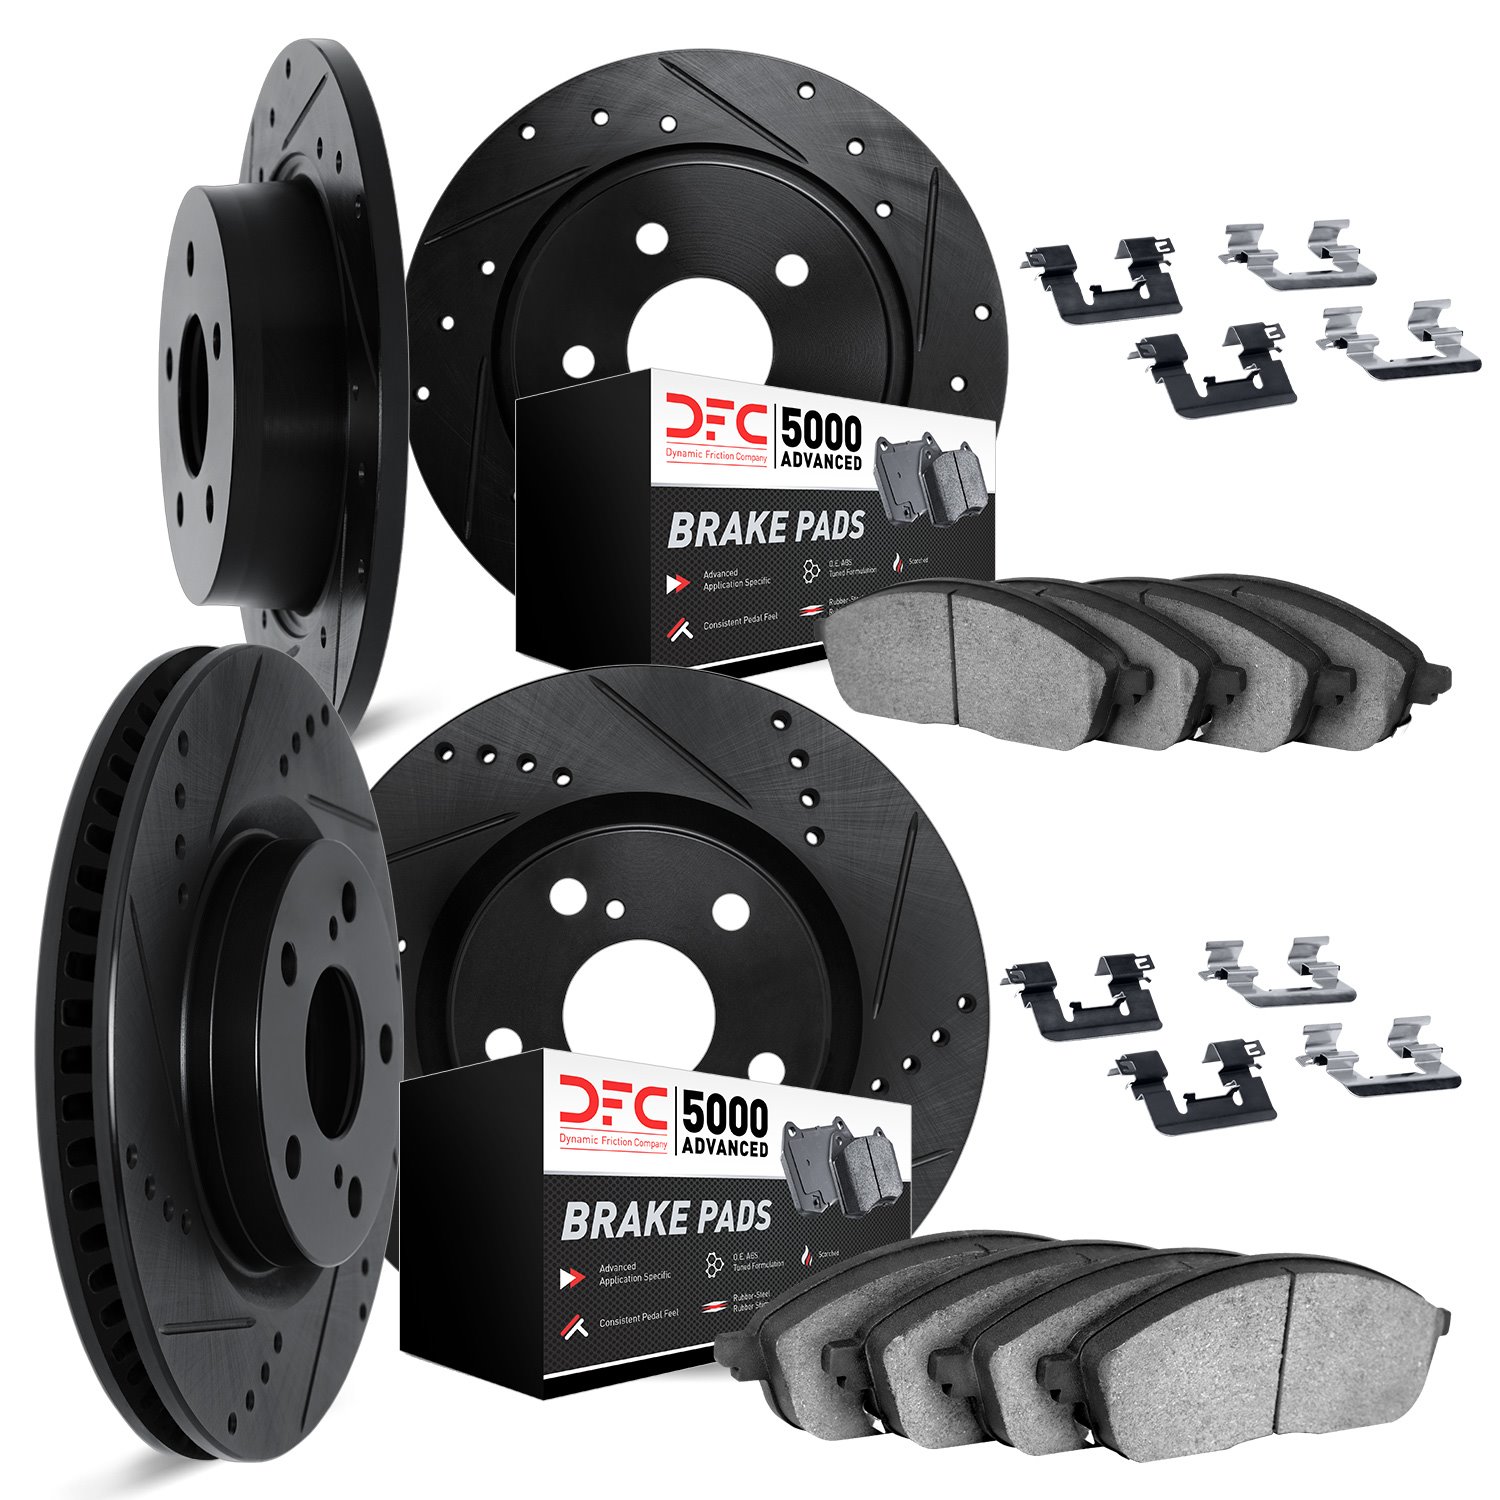 8514-42010 Drilled/Slotted Brake Rotors w/5000 Advanced Brake Pads Kit & Hardware [Black], 2007-2012 Mopar, Position: Front and